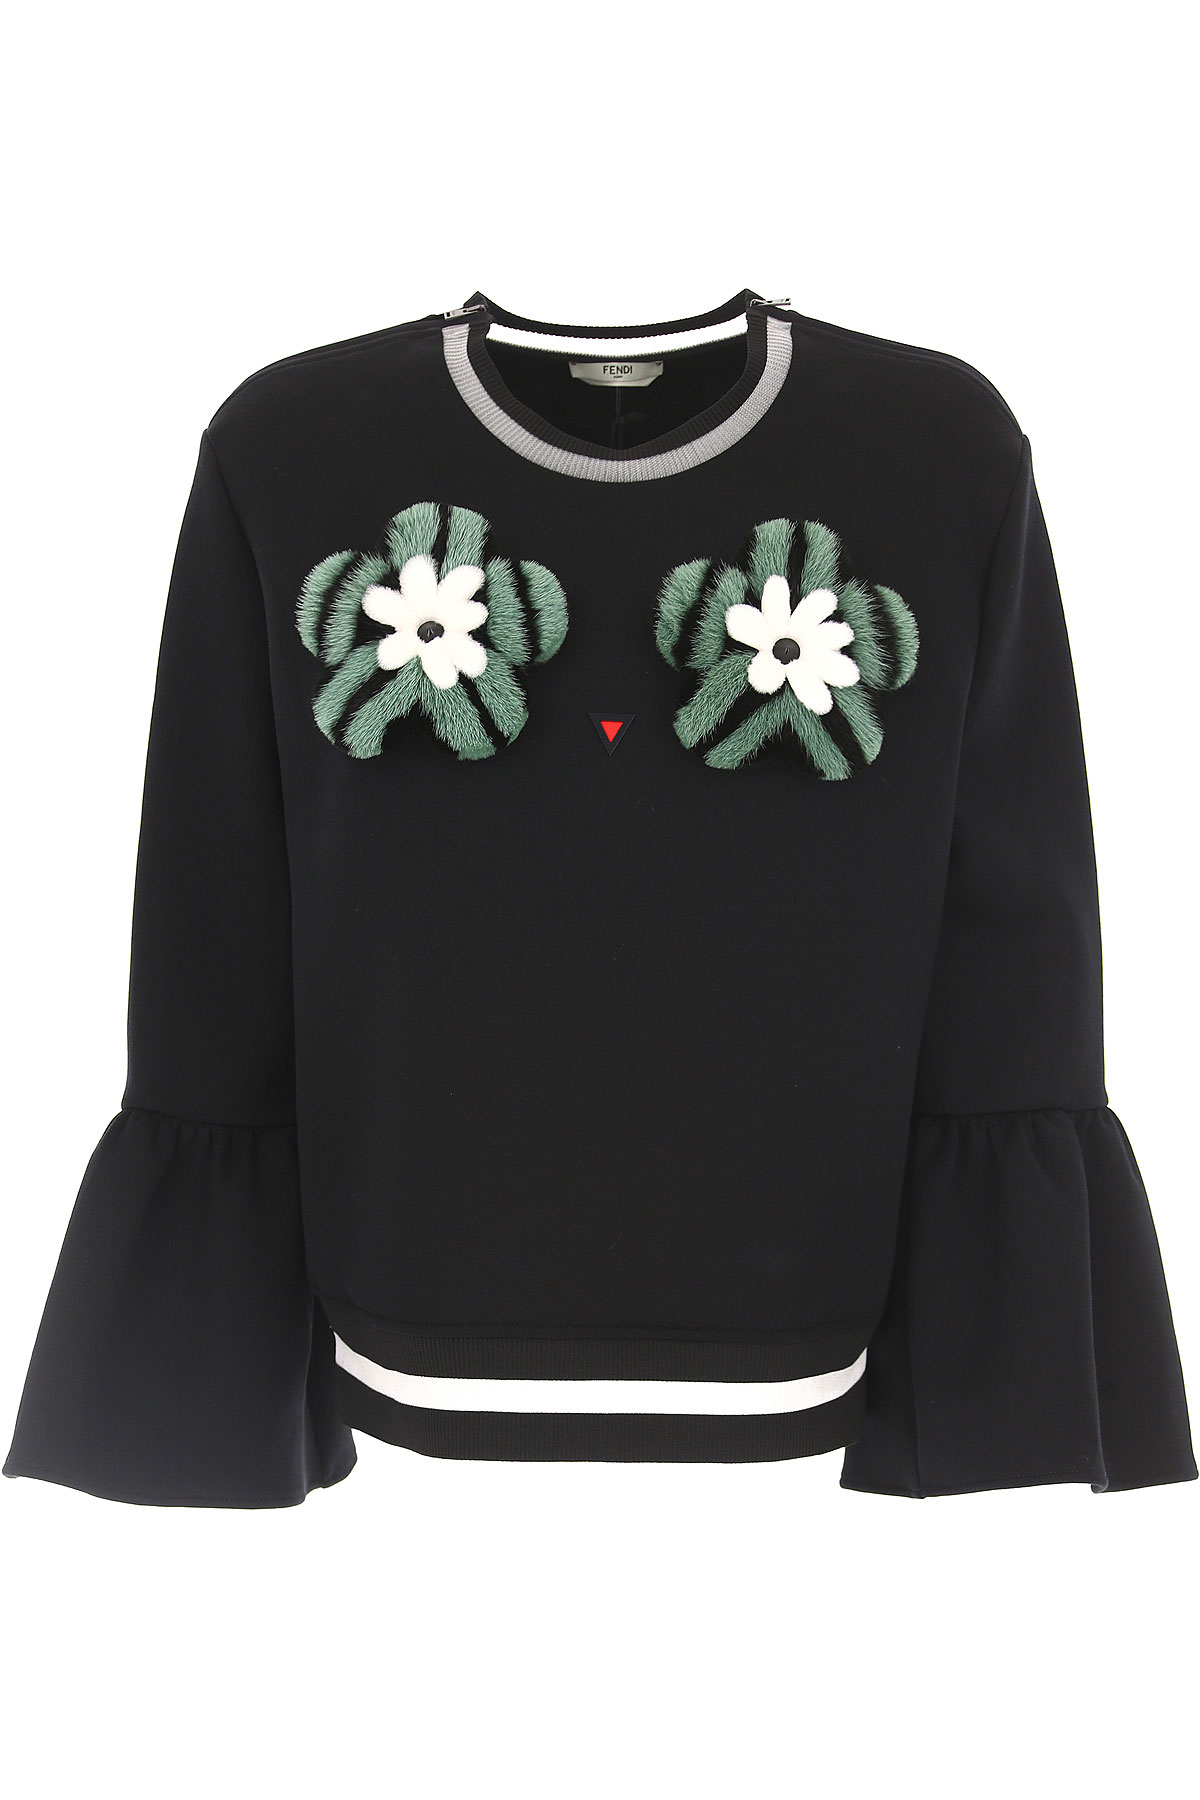 Fendi Sweatshirt for Women , Noir, Coton, 2017, 40 42